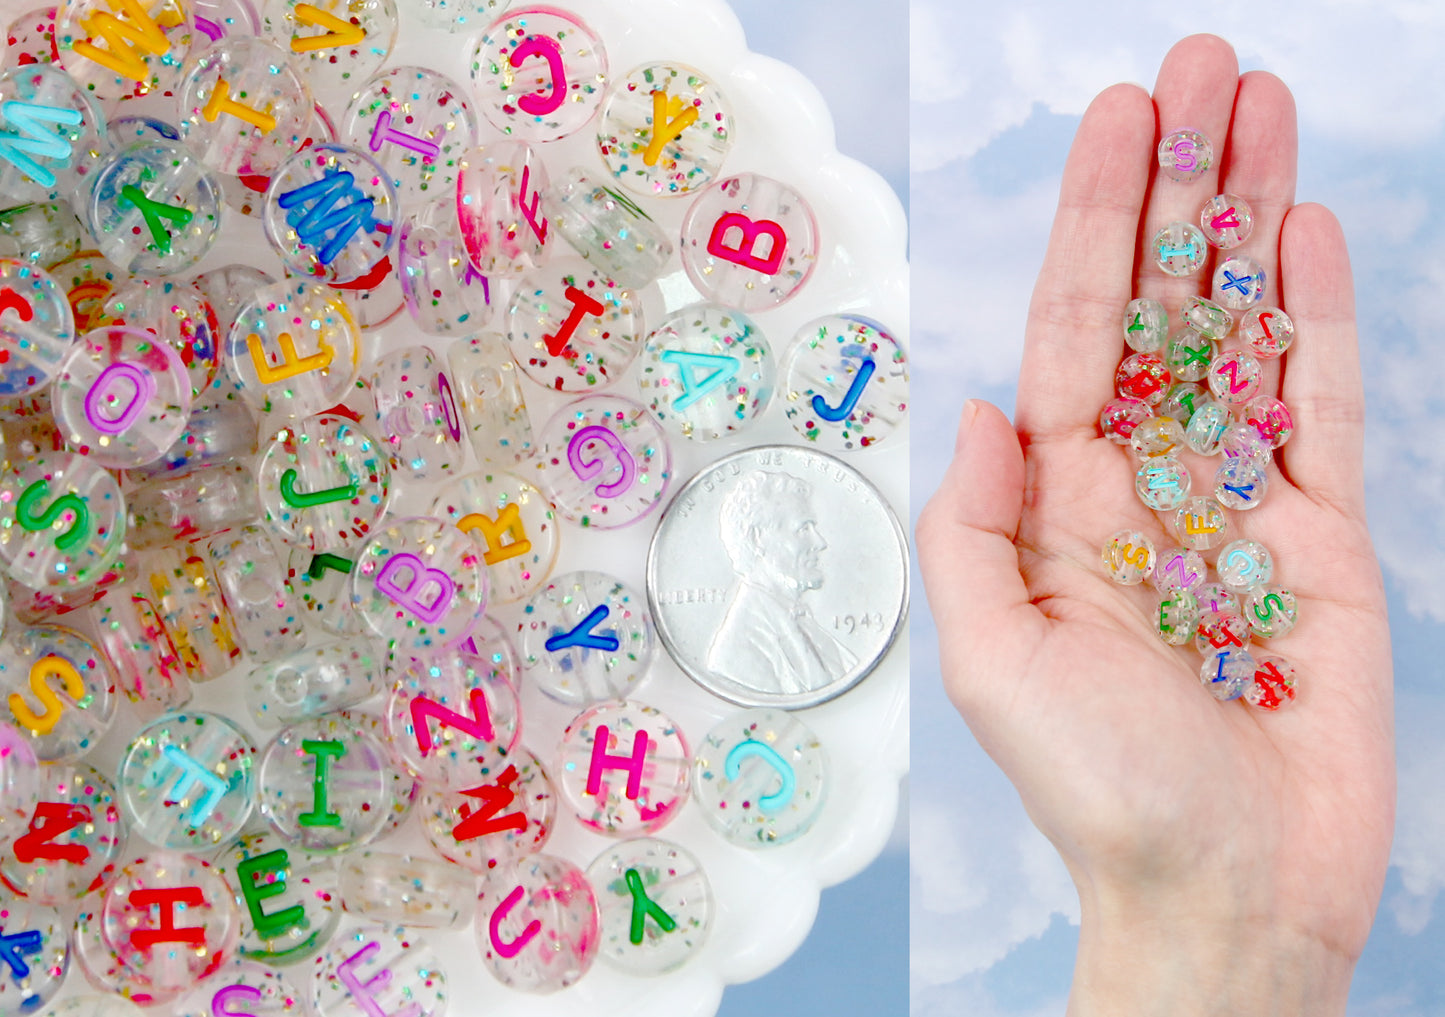 Big Letter Beads - 10mm Large Glitter Translucent Alphabet Acrylic or Resin Beads - 170 pc set